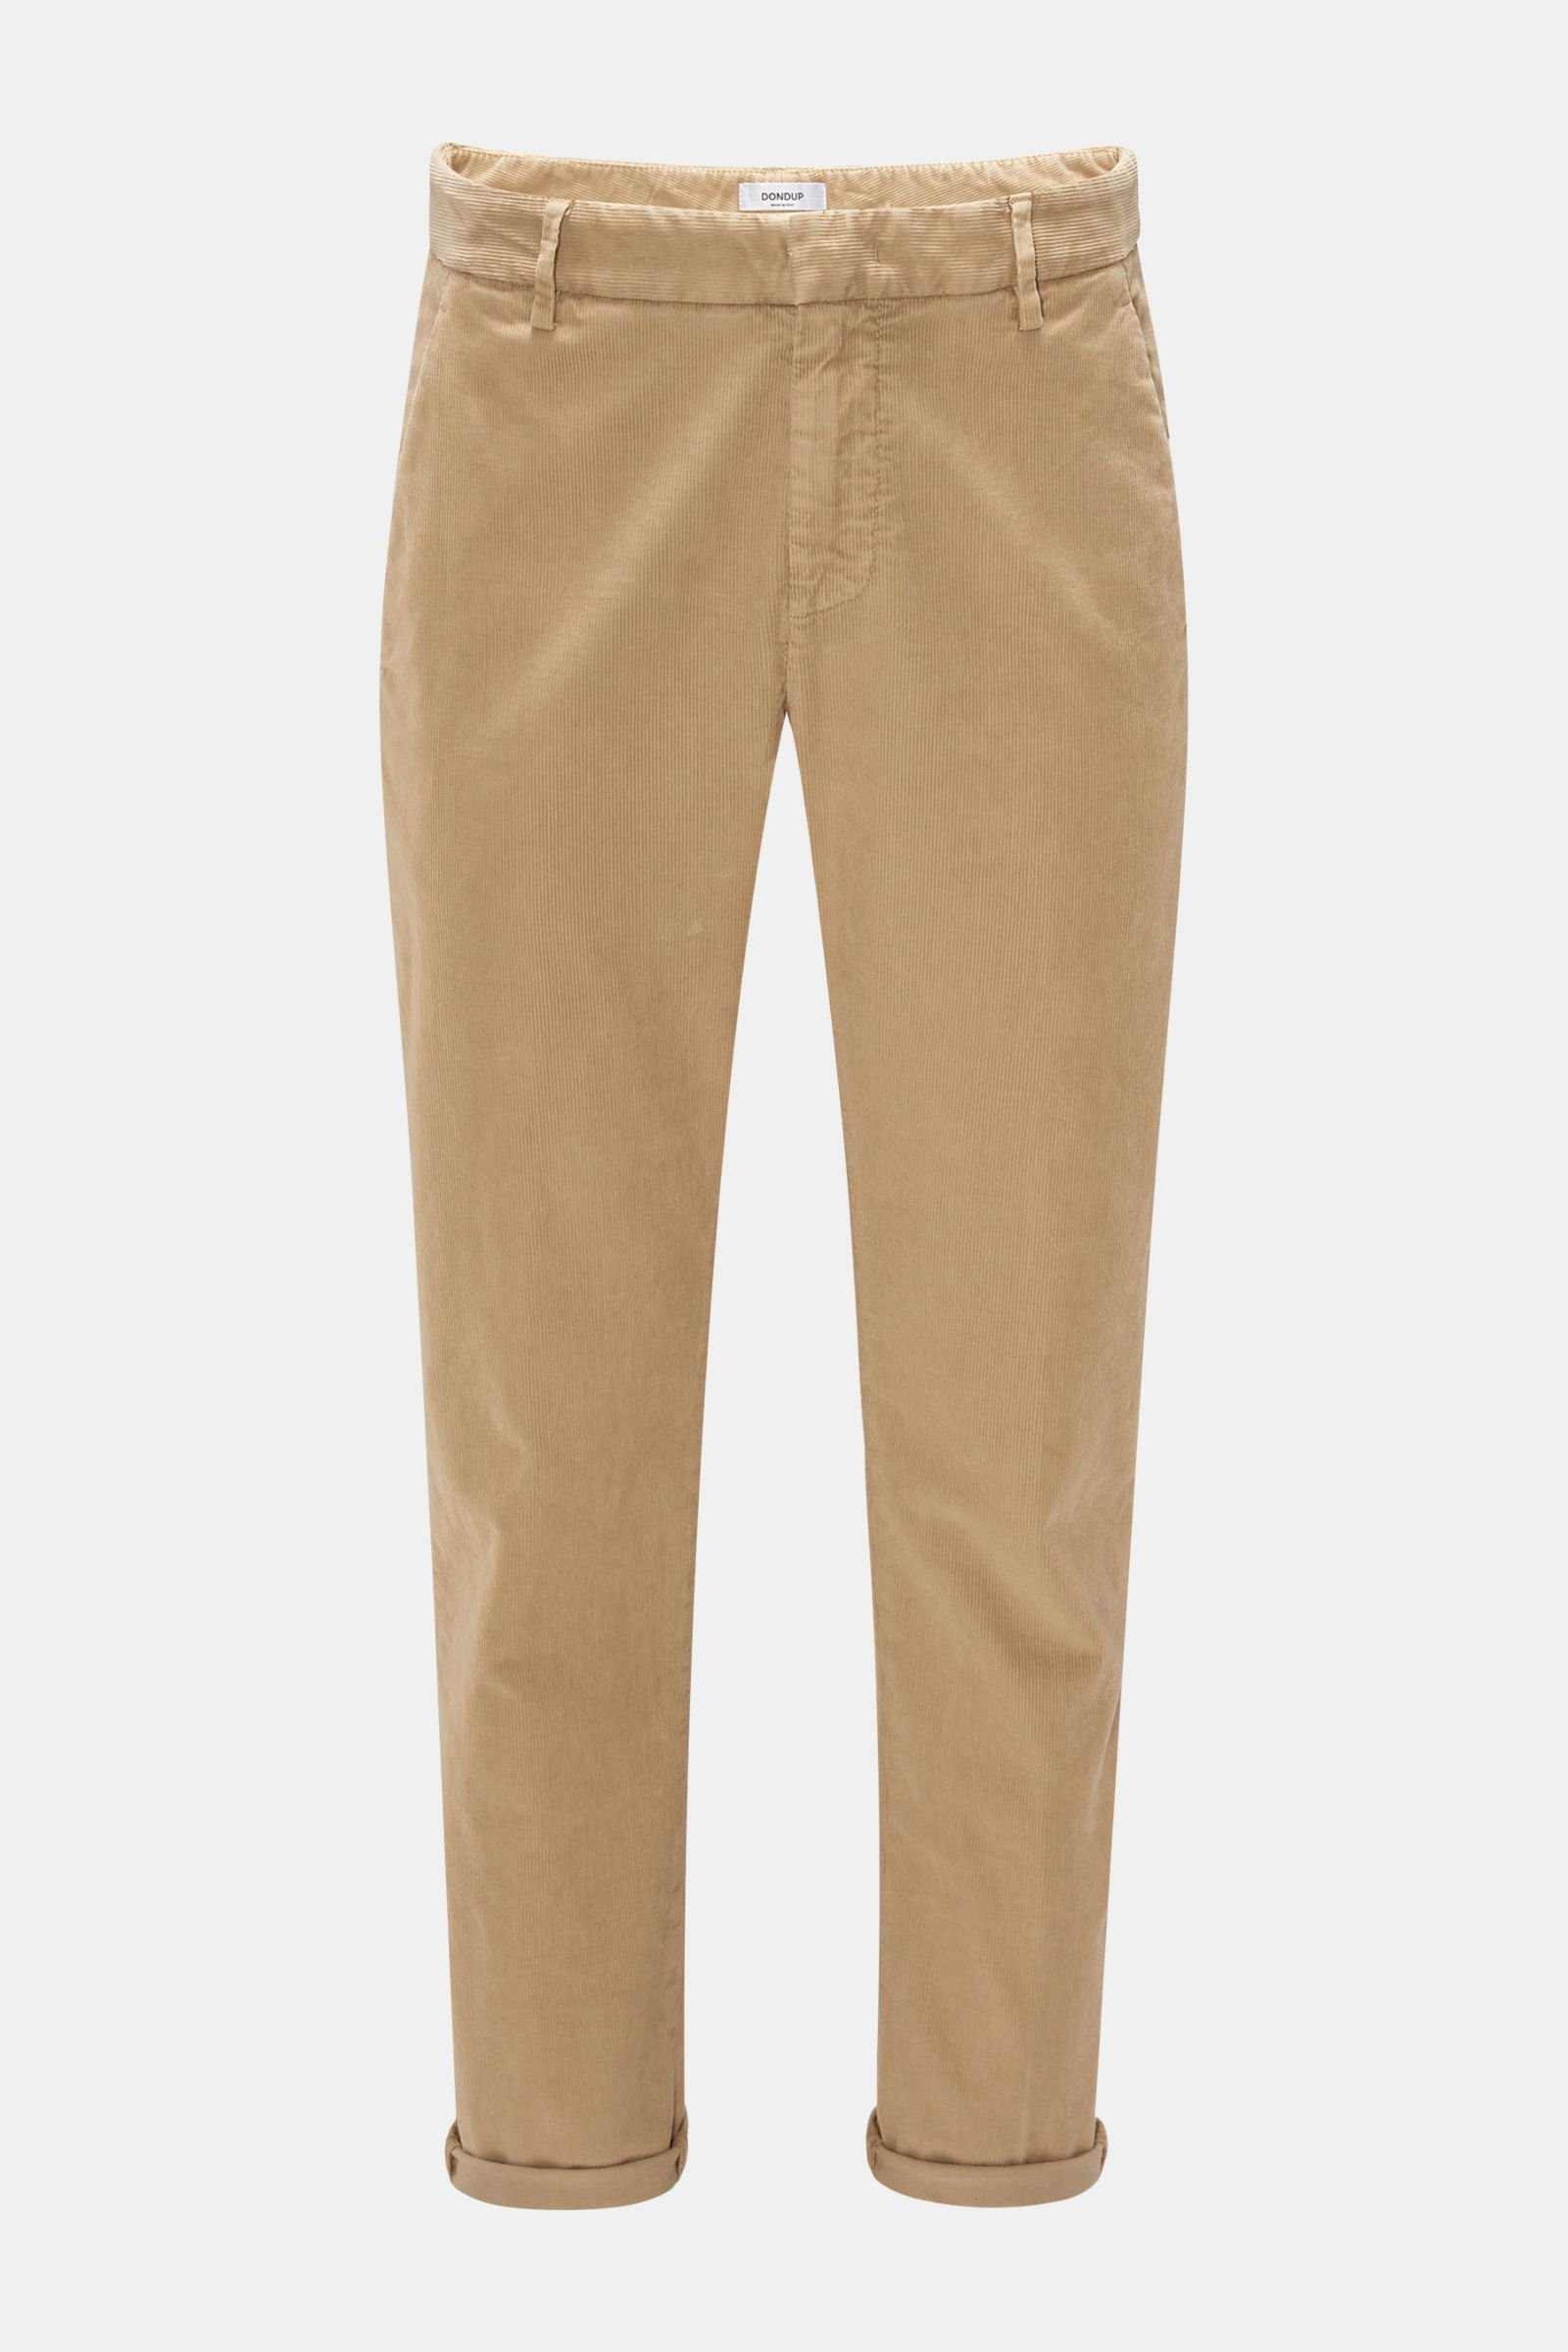 Corduroy trousers beige